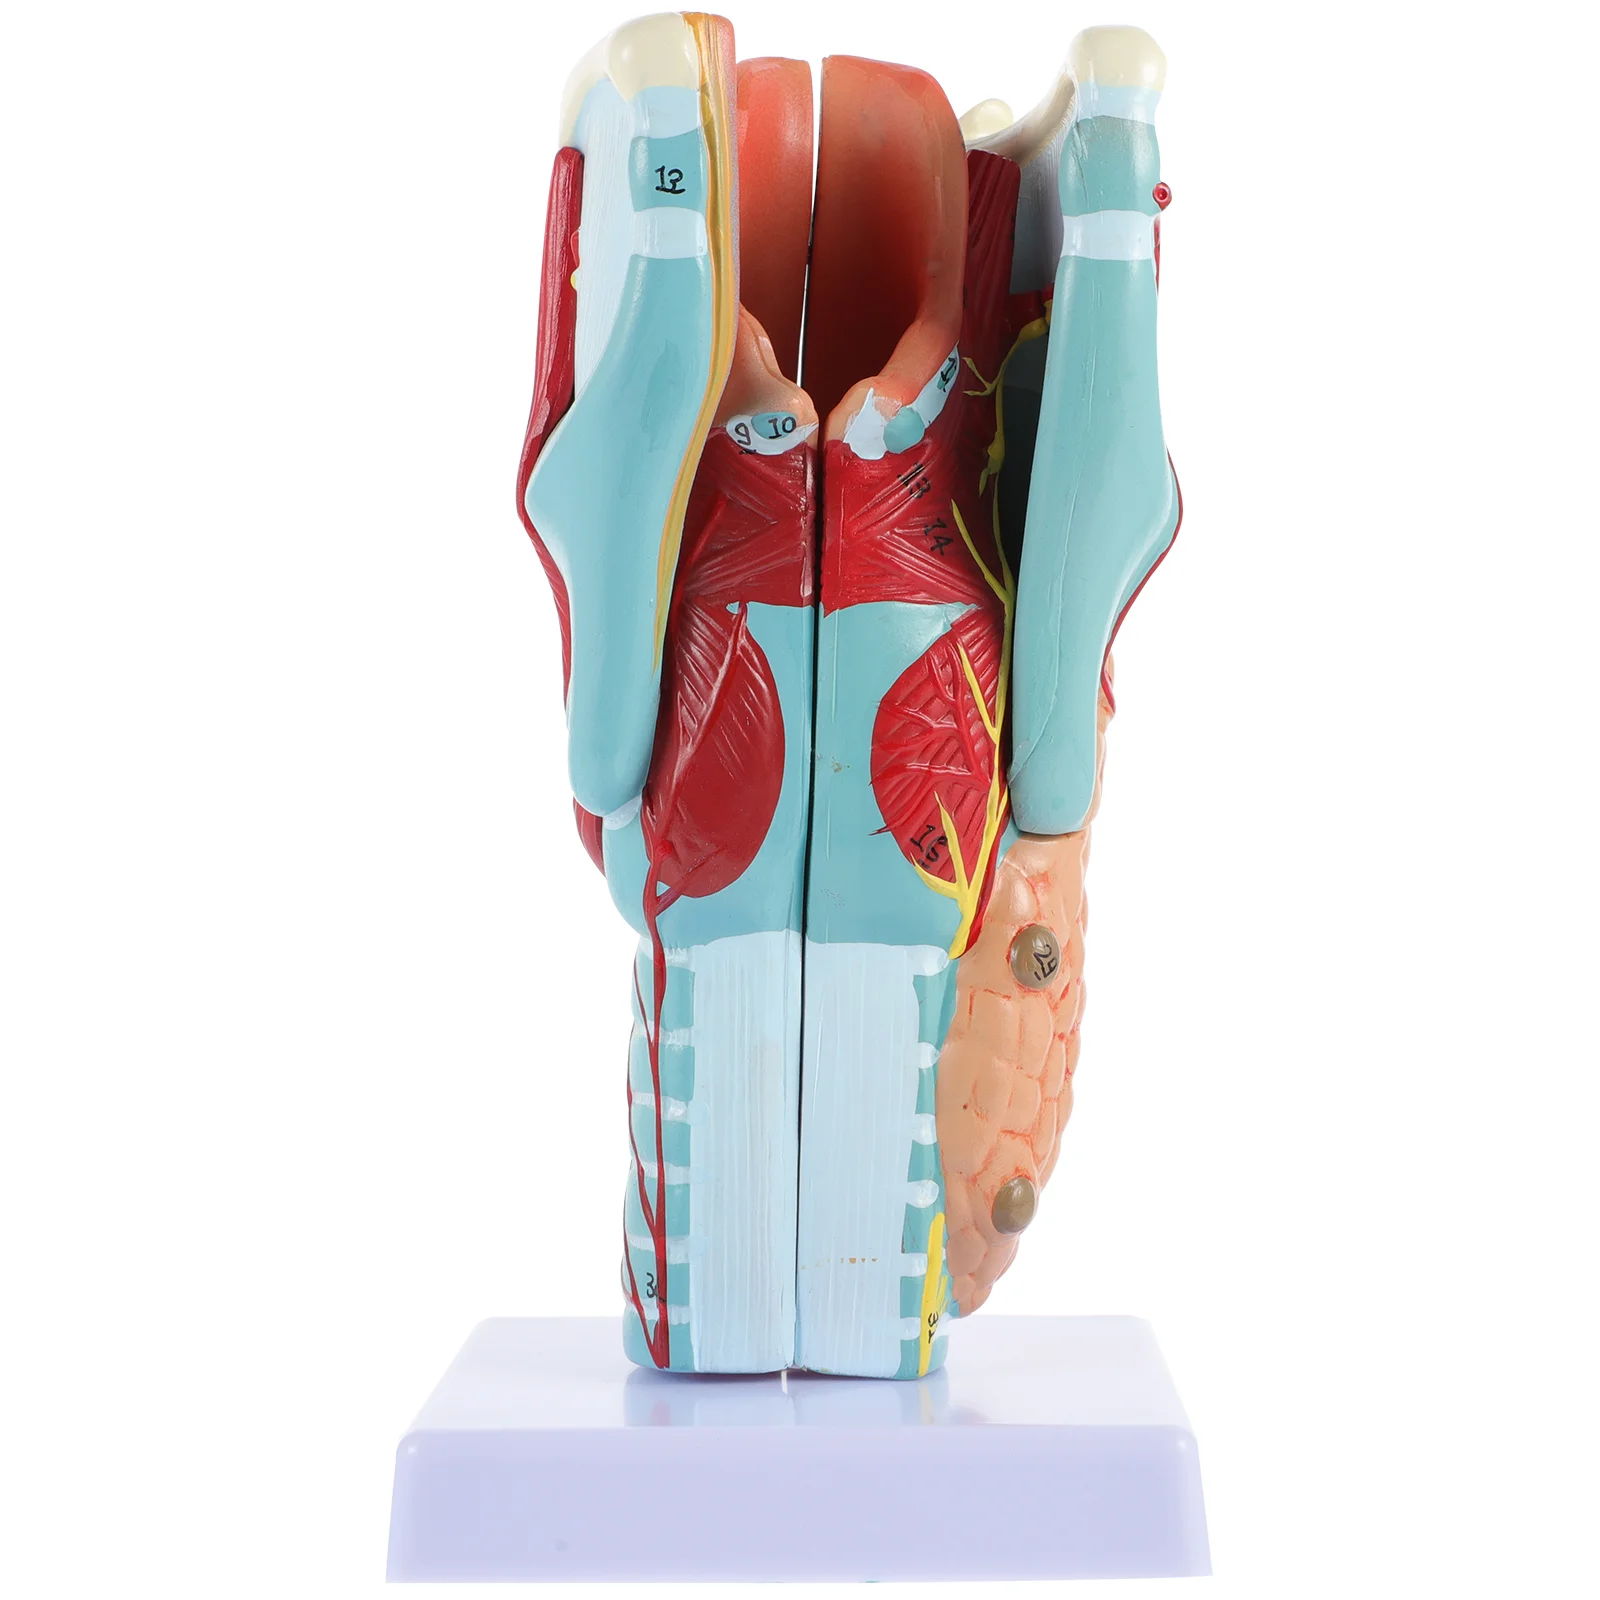 

Model Anatomy Torso Human Throat 3D Anatomical Larynx Exposed Displaycavity Students Study Teaching Aids Sinuses